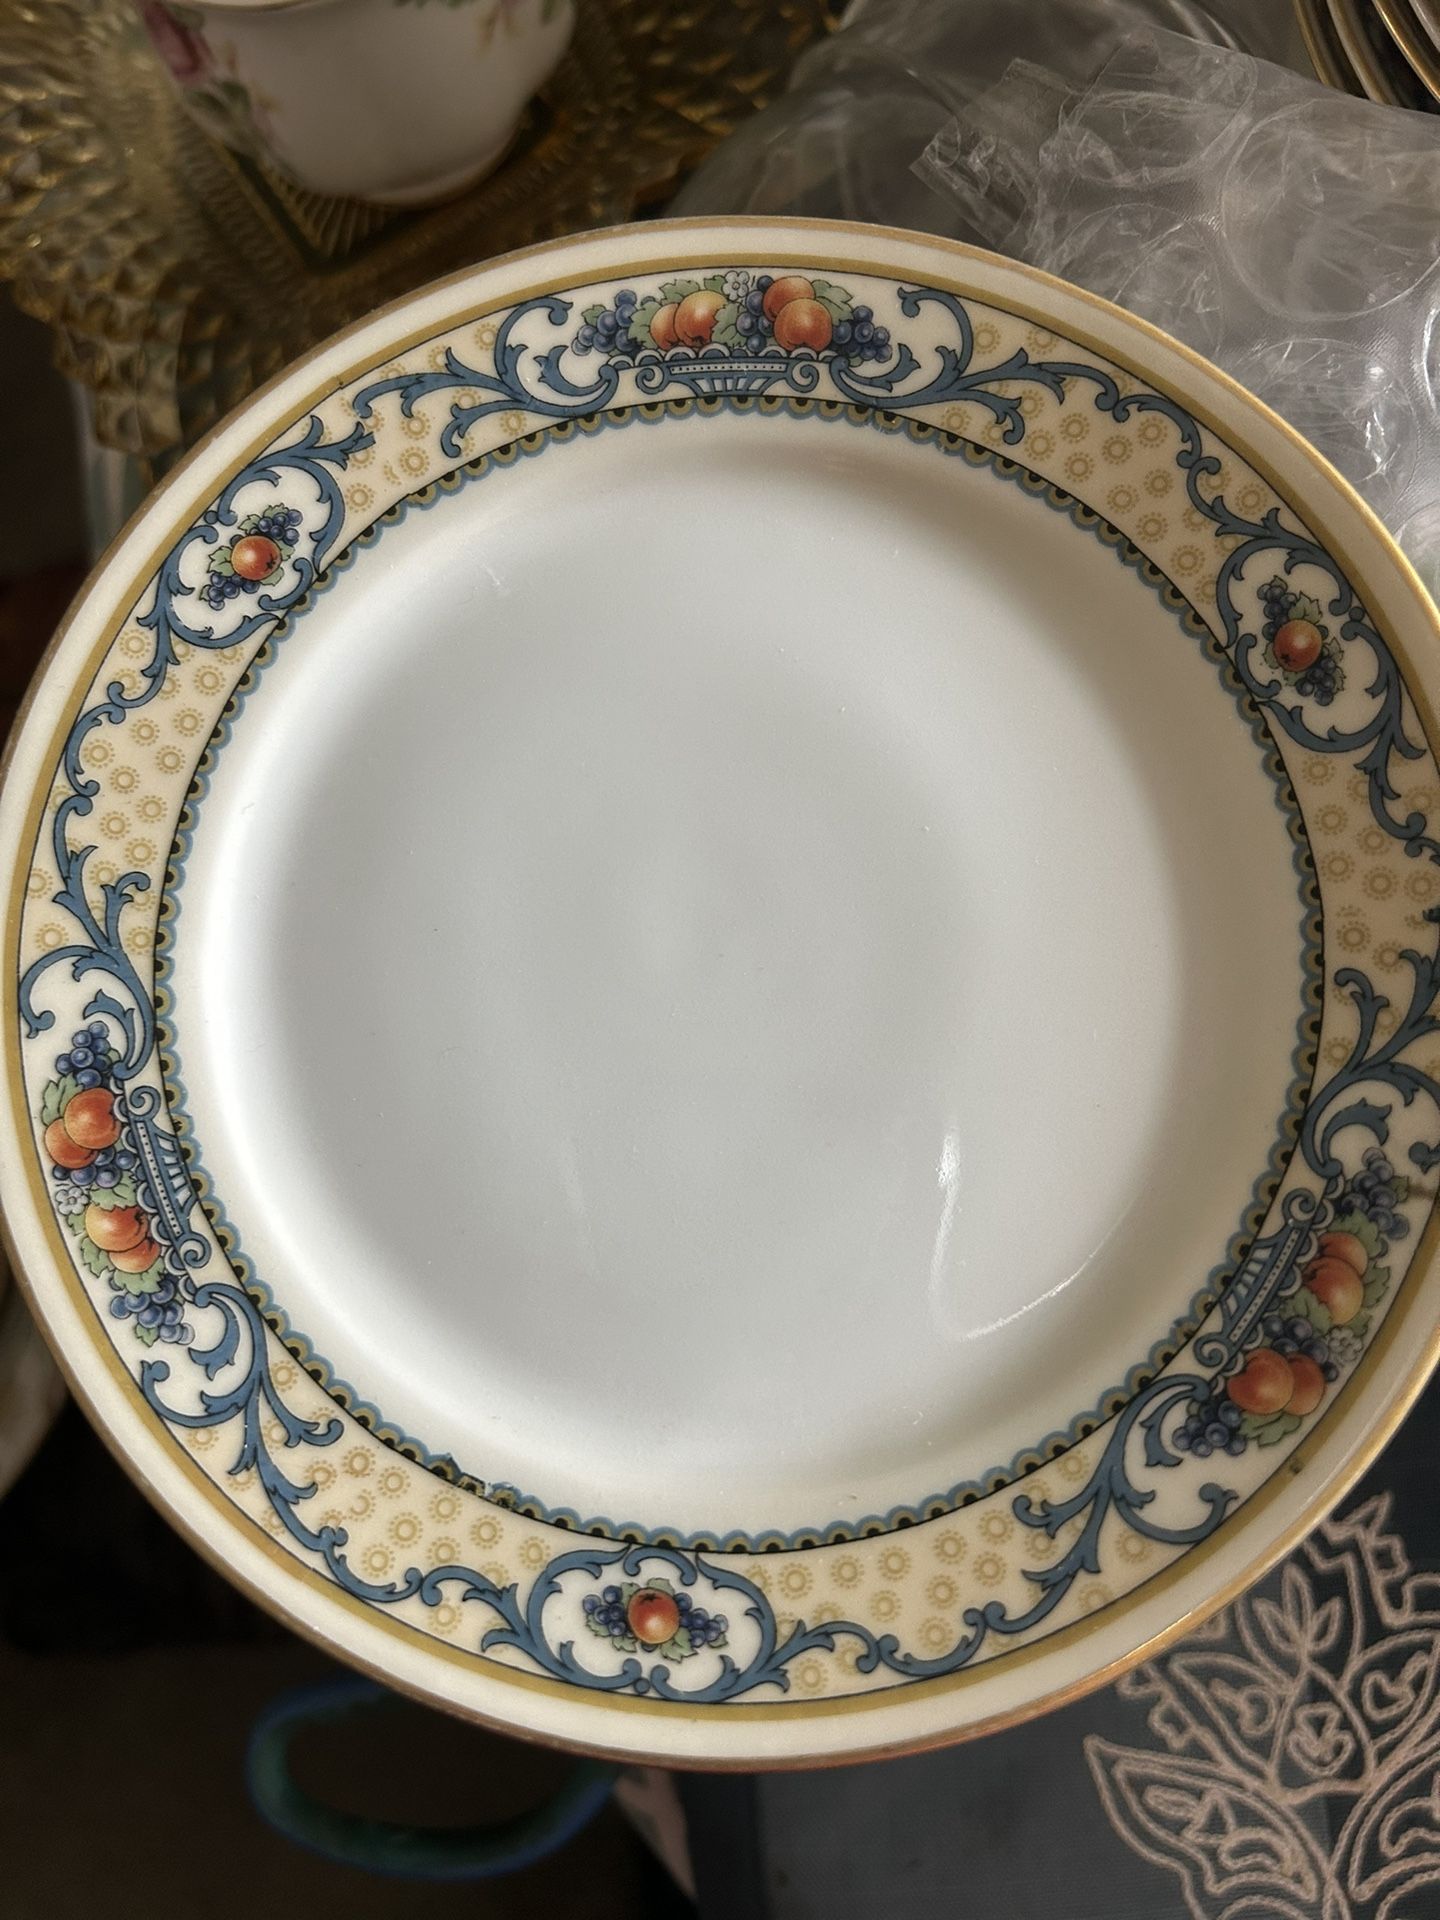 6”  China Plates/ Saucers